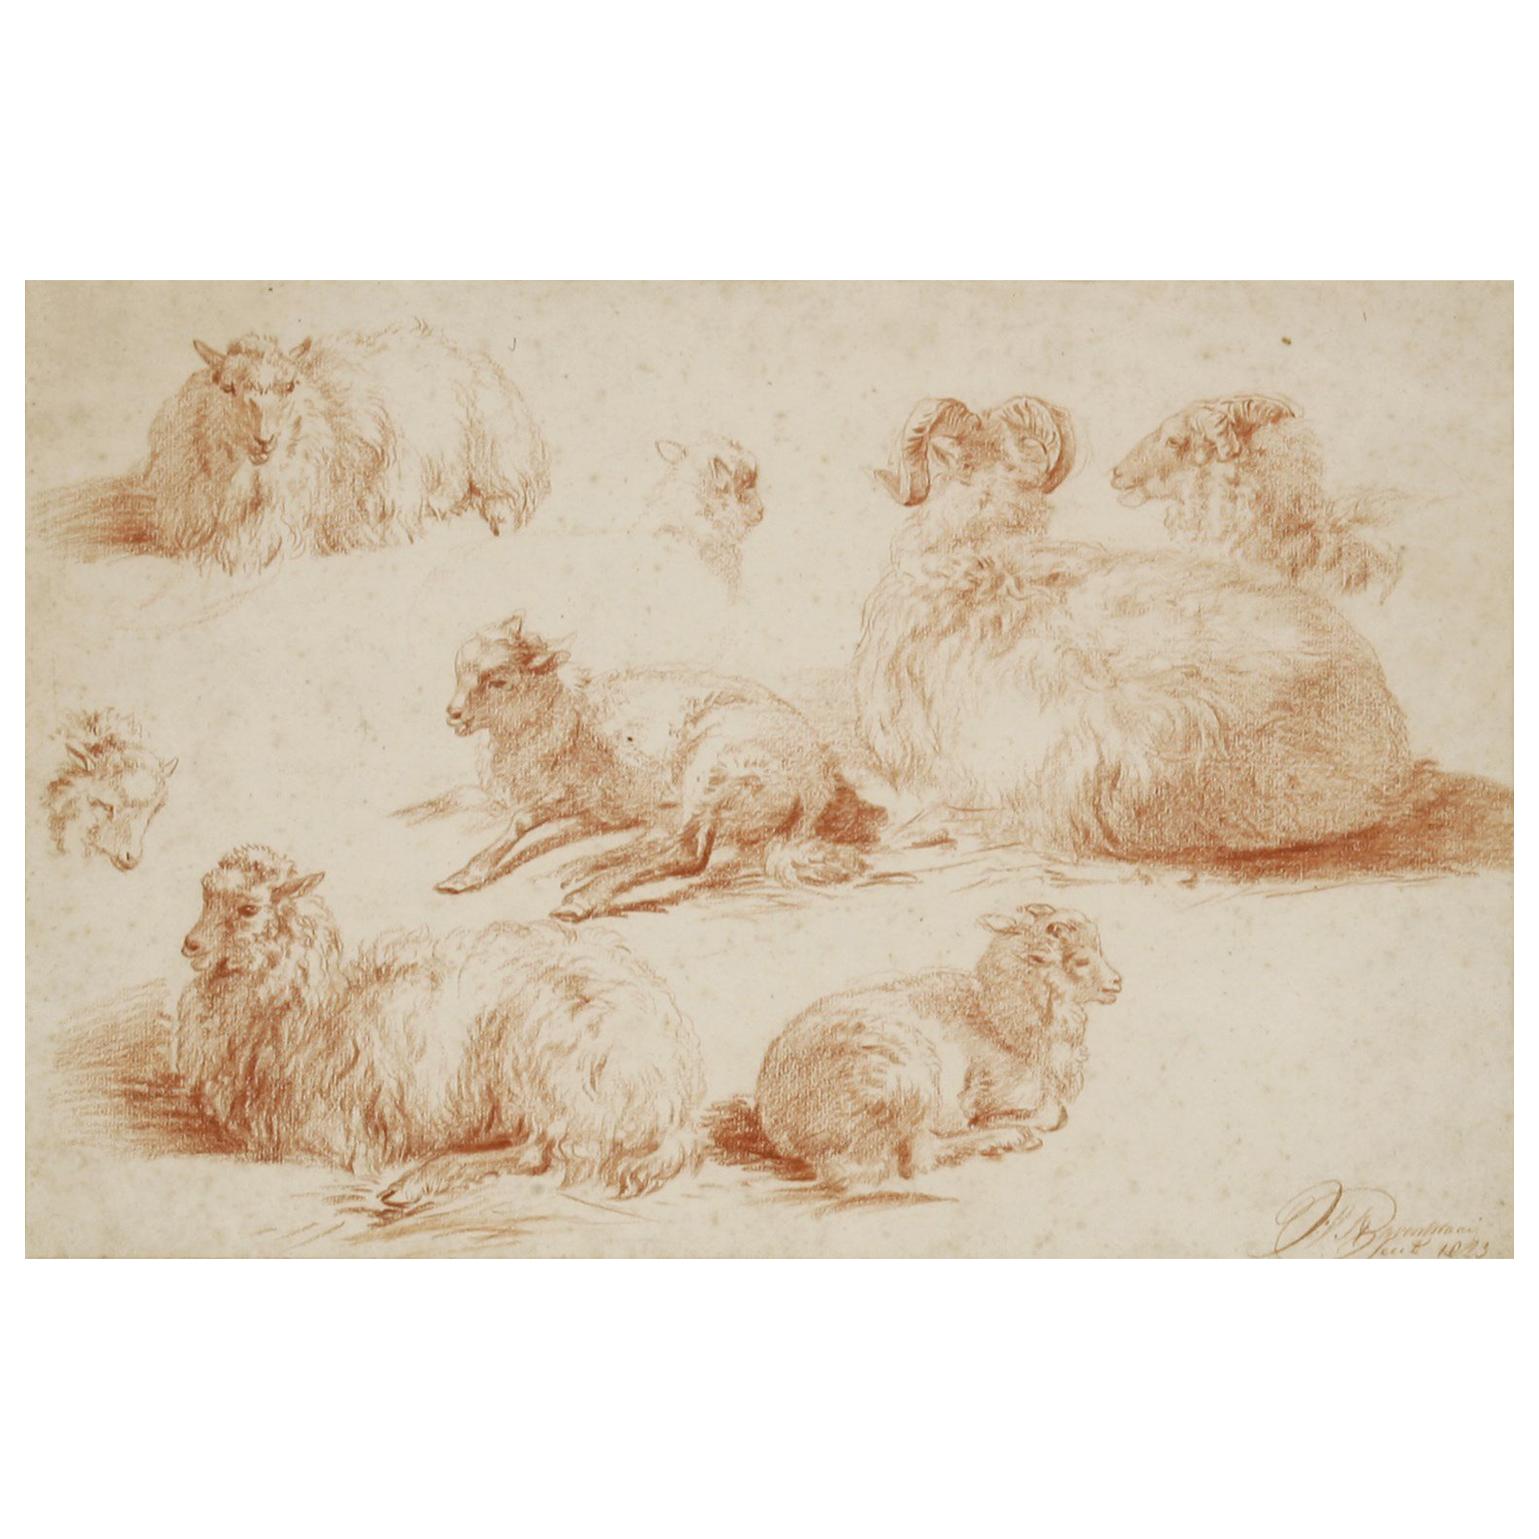 19th Century Red Chalk Drawing of Sheep by Jan van Ravenswaay